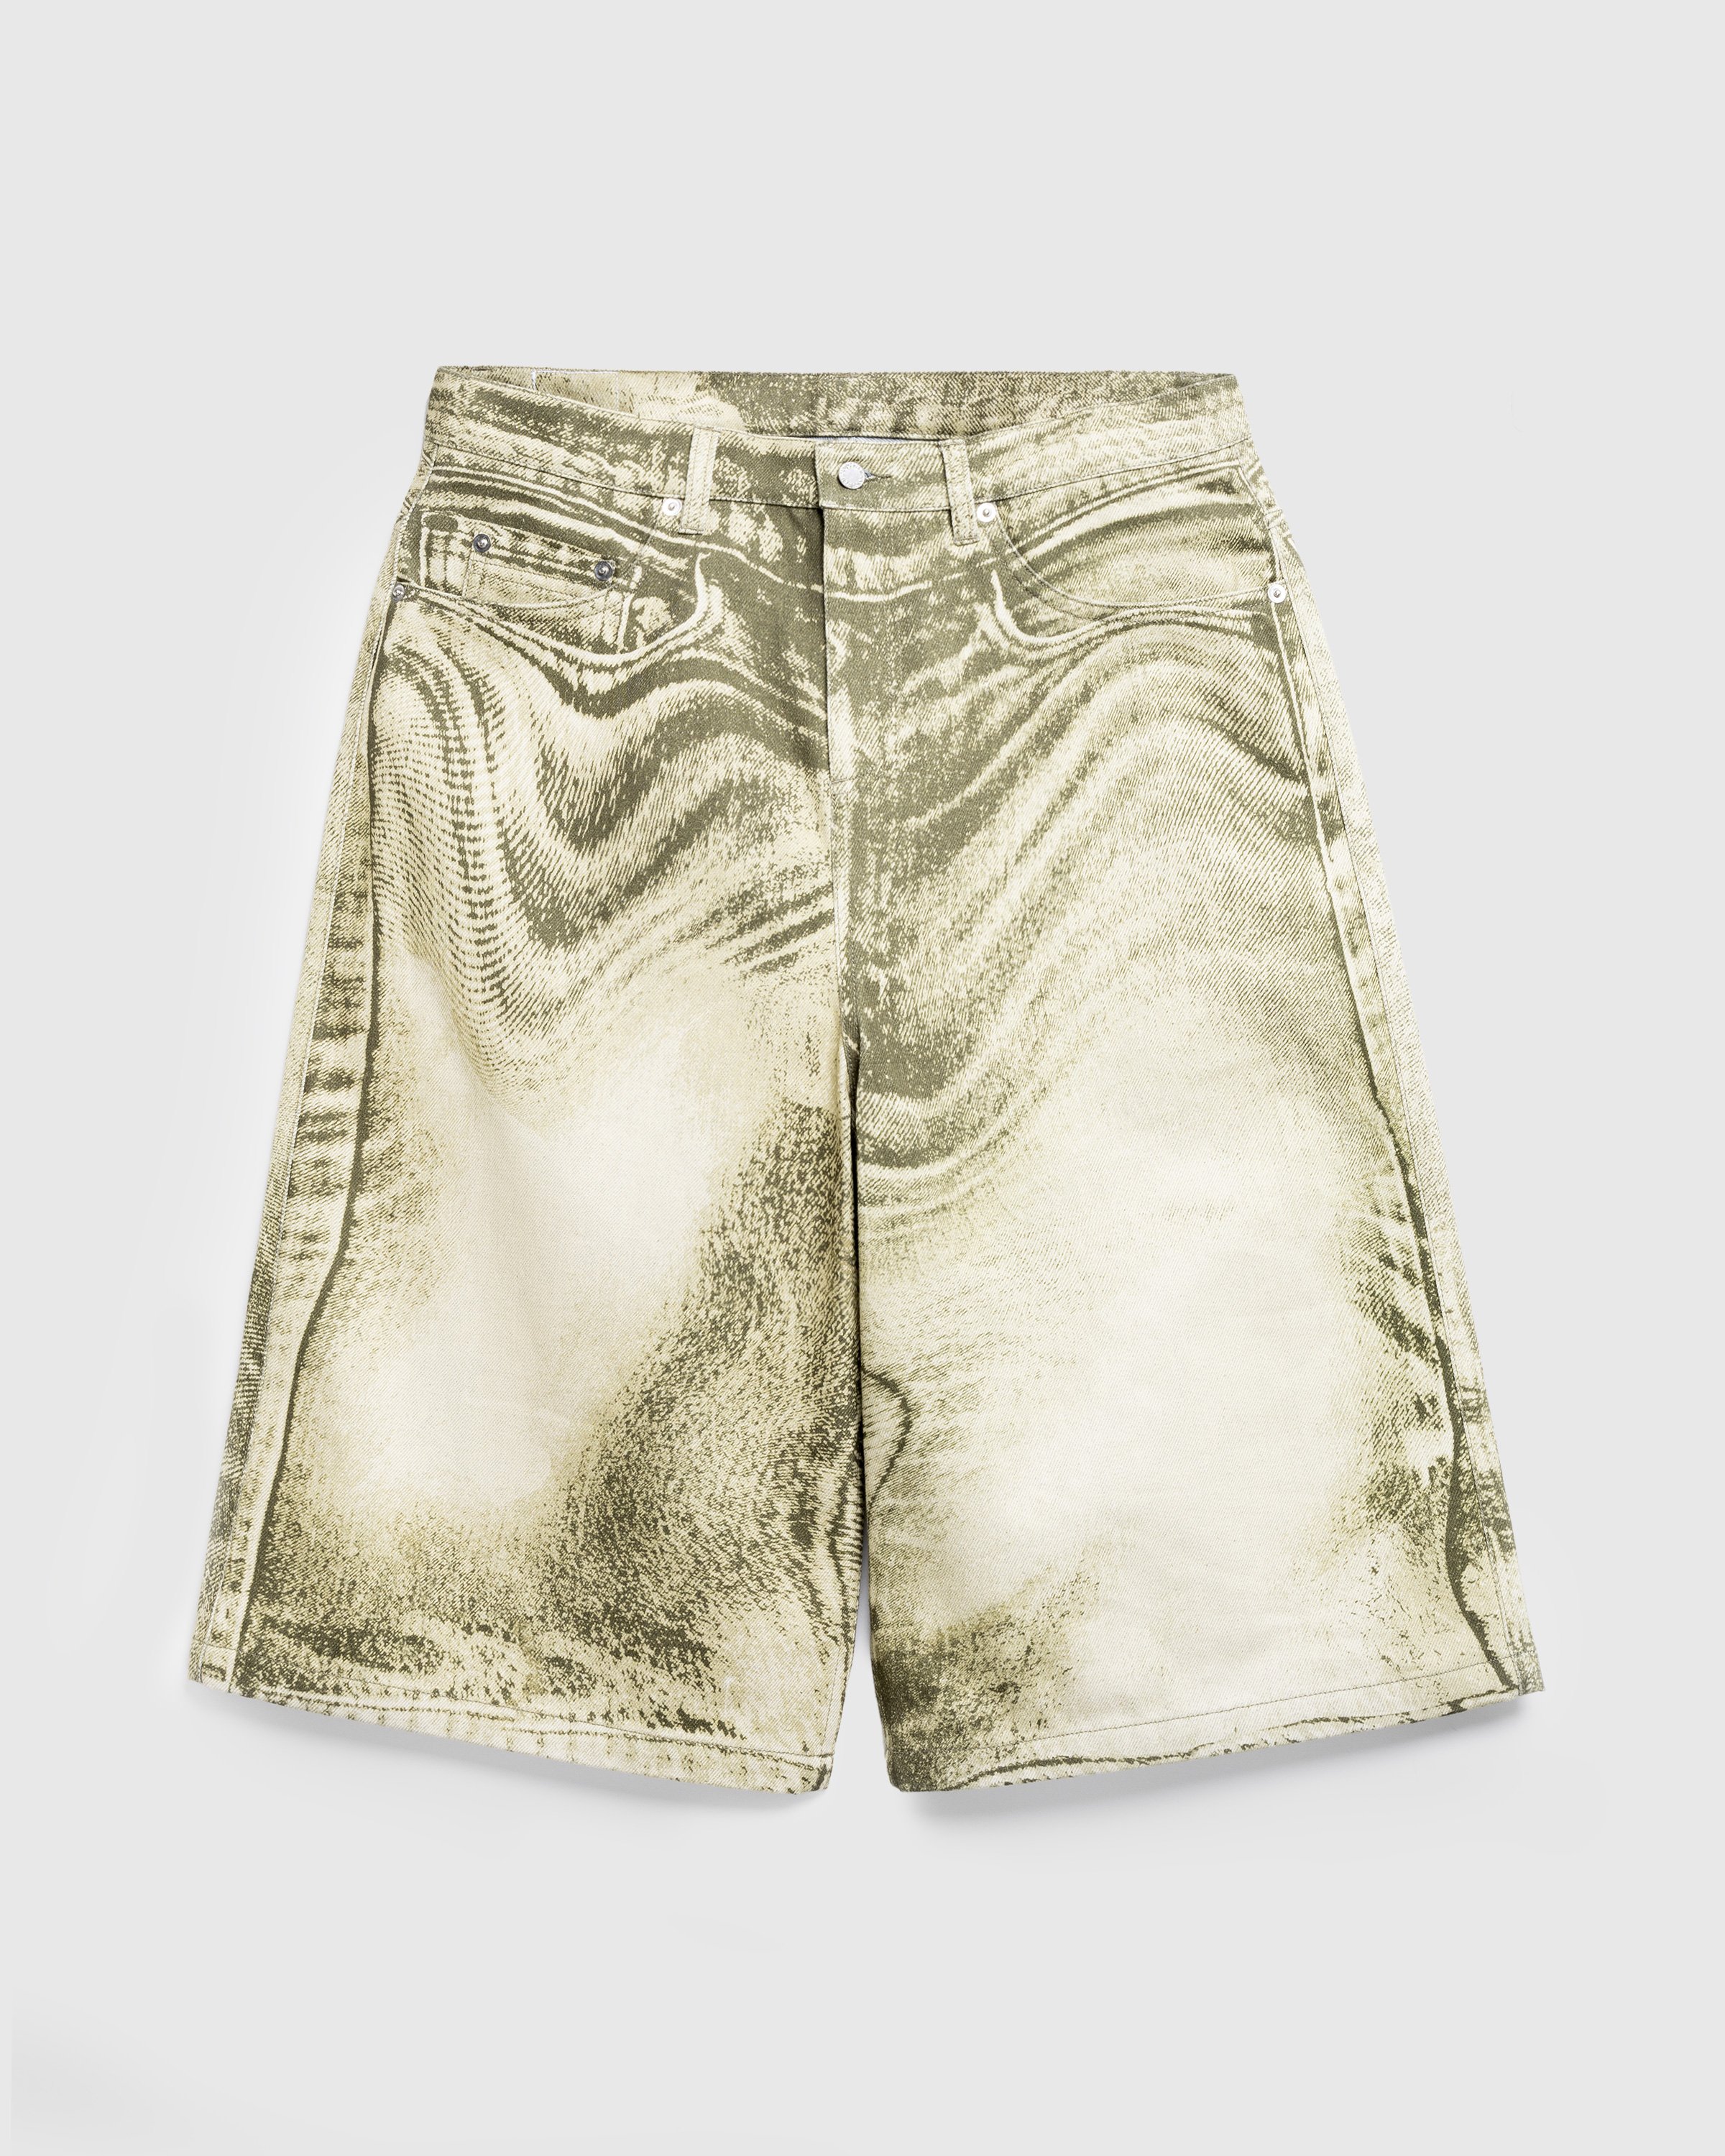 CAMPERLAB - Jeans - Clothing - Multi - Image 1